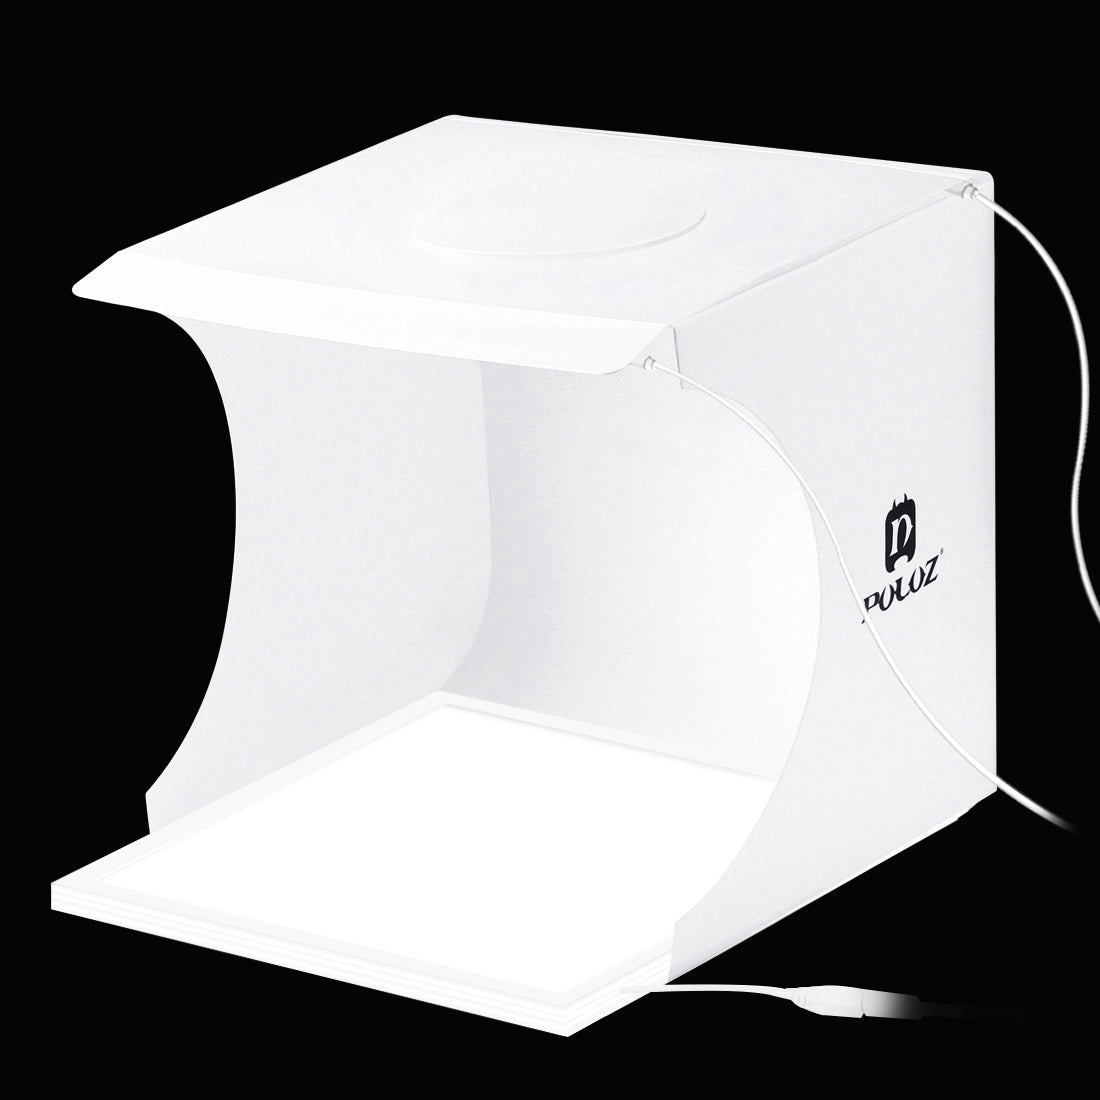 Puluz PU5137 LED Photography Shadowless Bottom Light Lamp Panel Pad + 2LED Panels 20CM Lightbox Photo Studio Shooting Tent Box